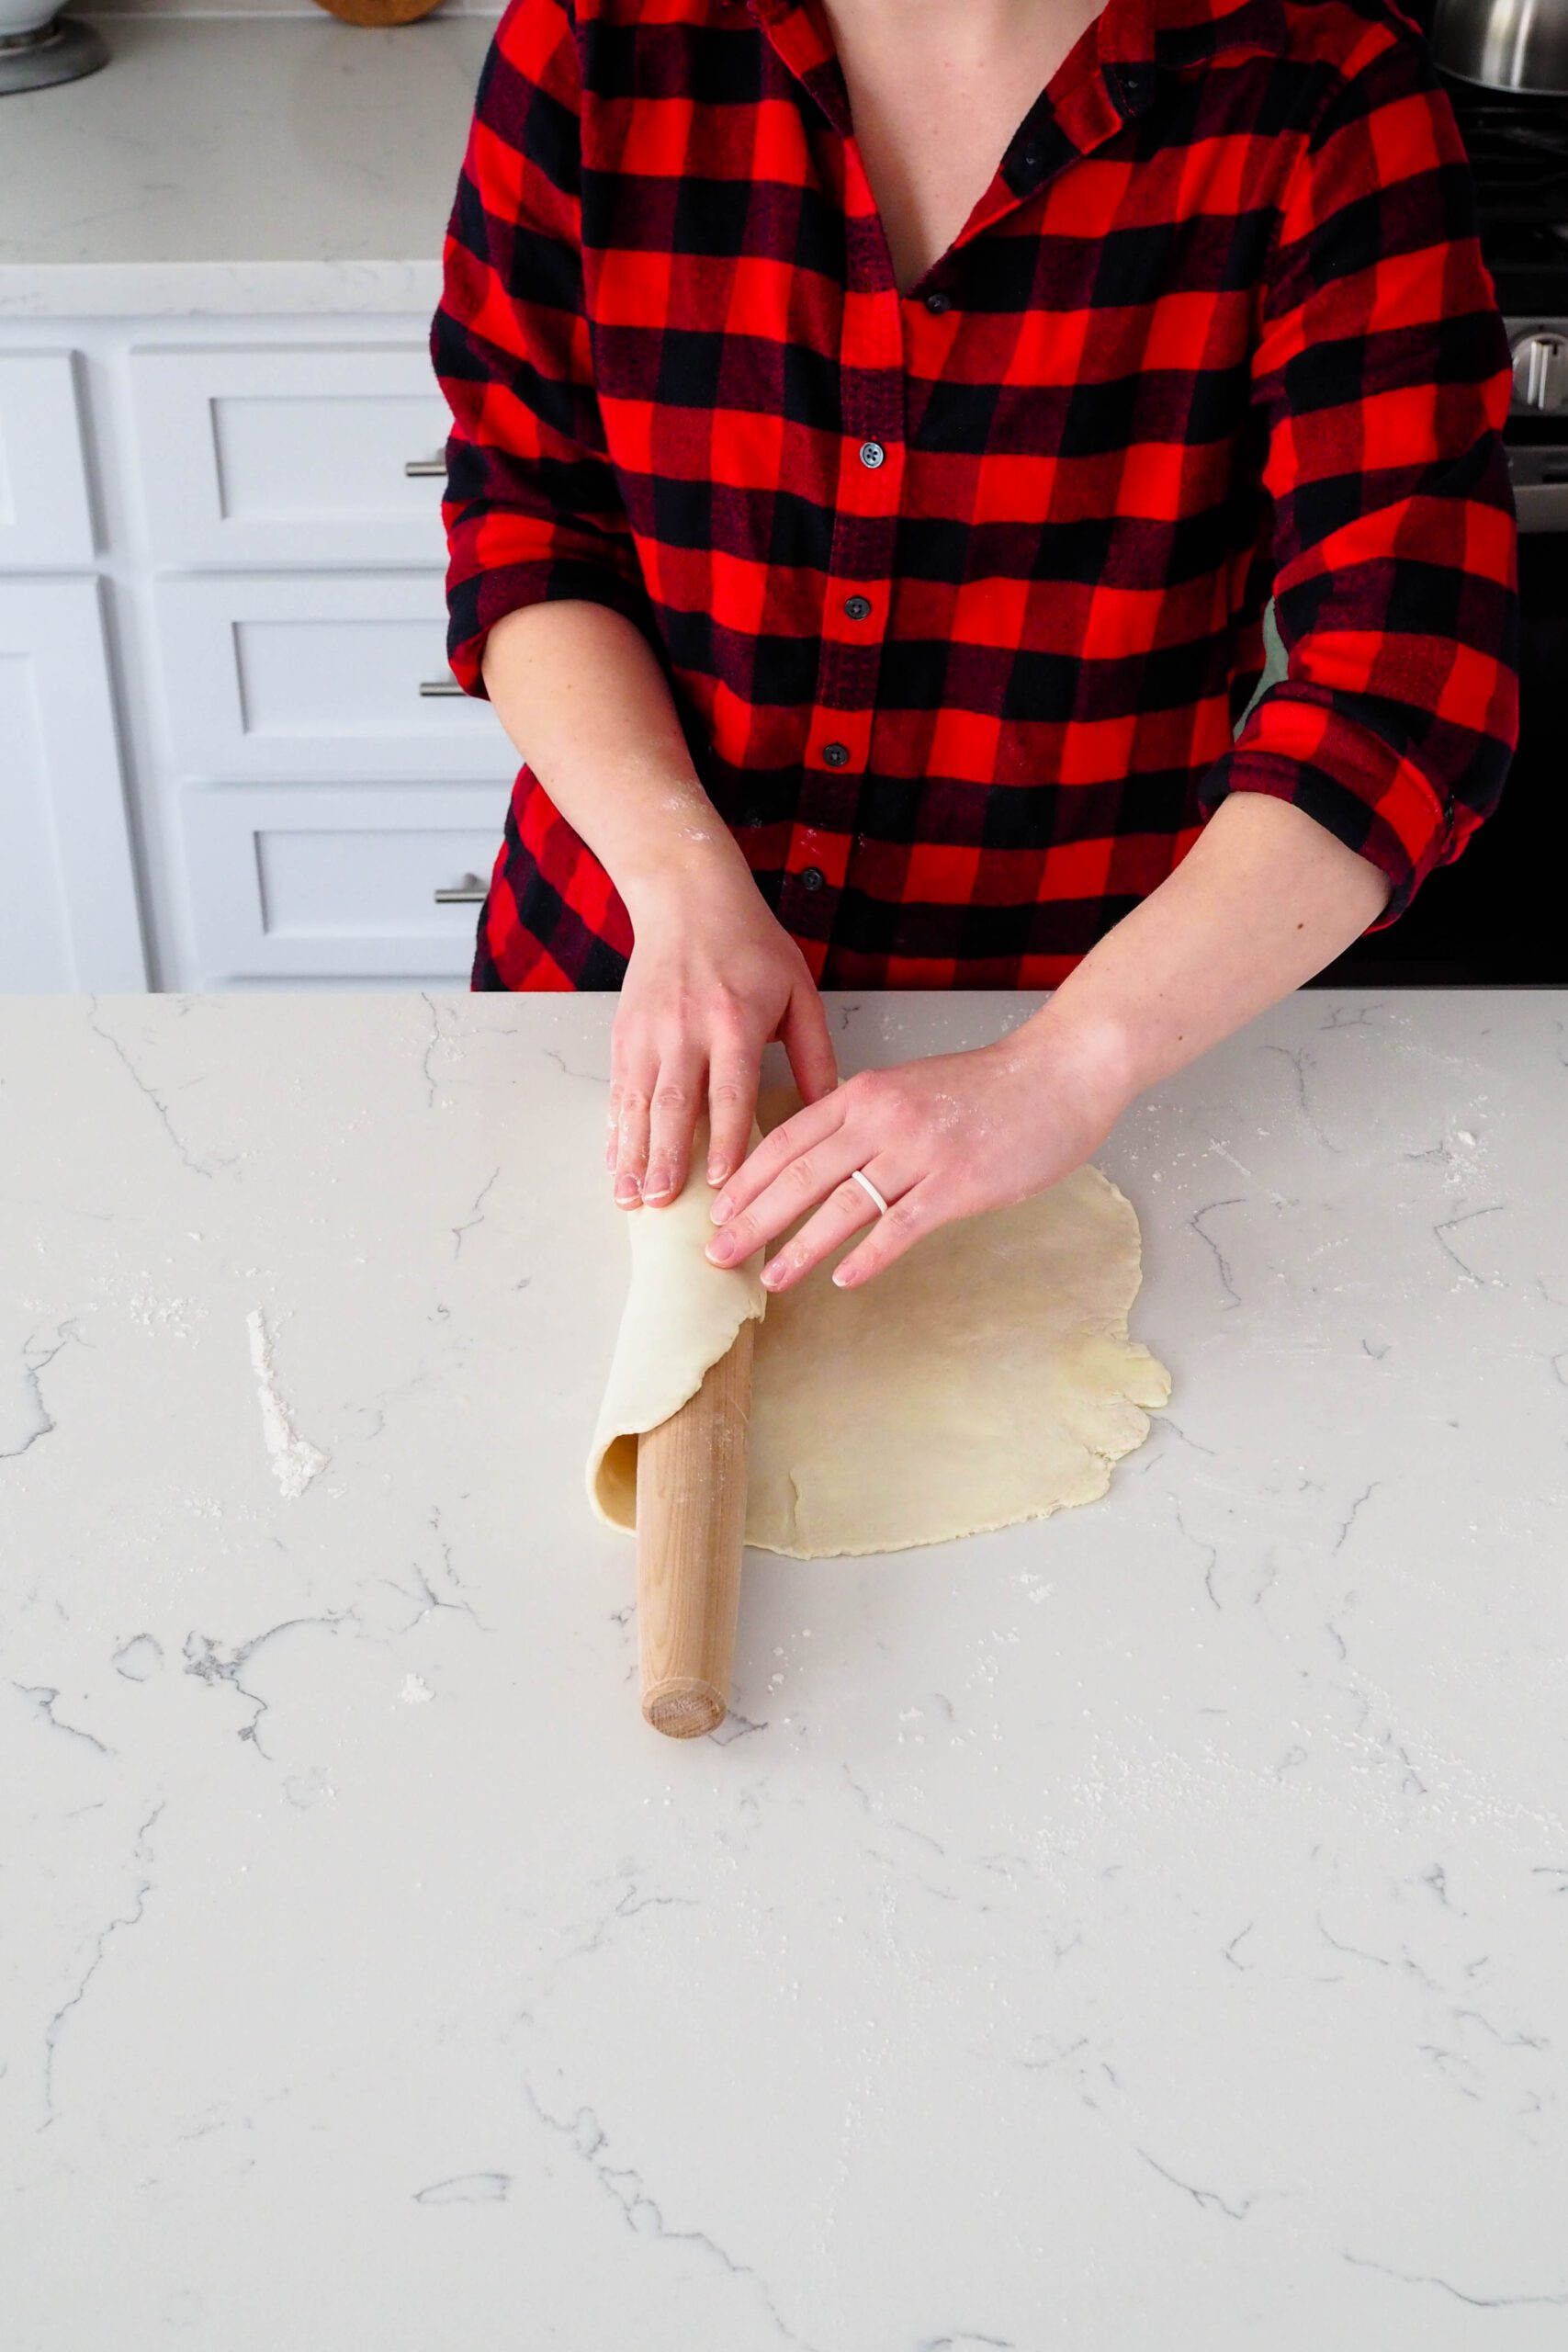 A woman wraps pie dough around a rolling pin.